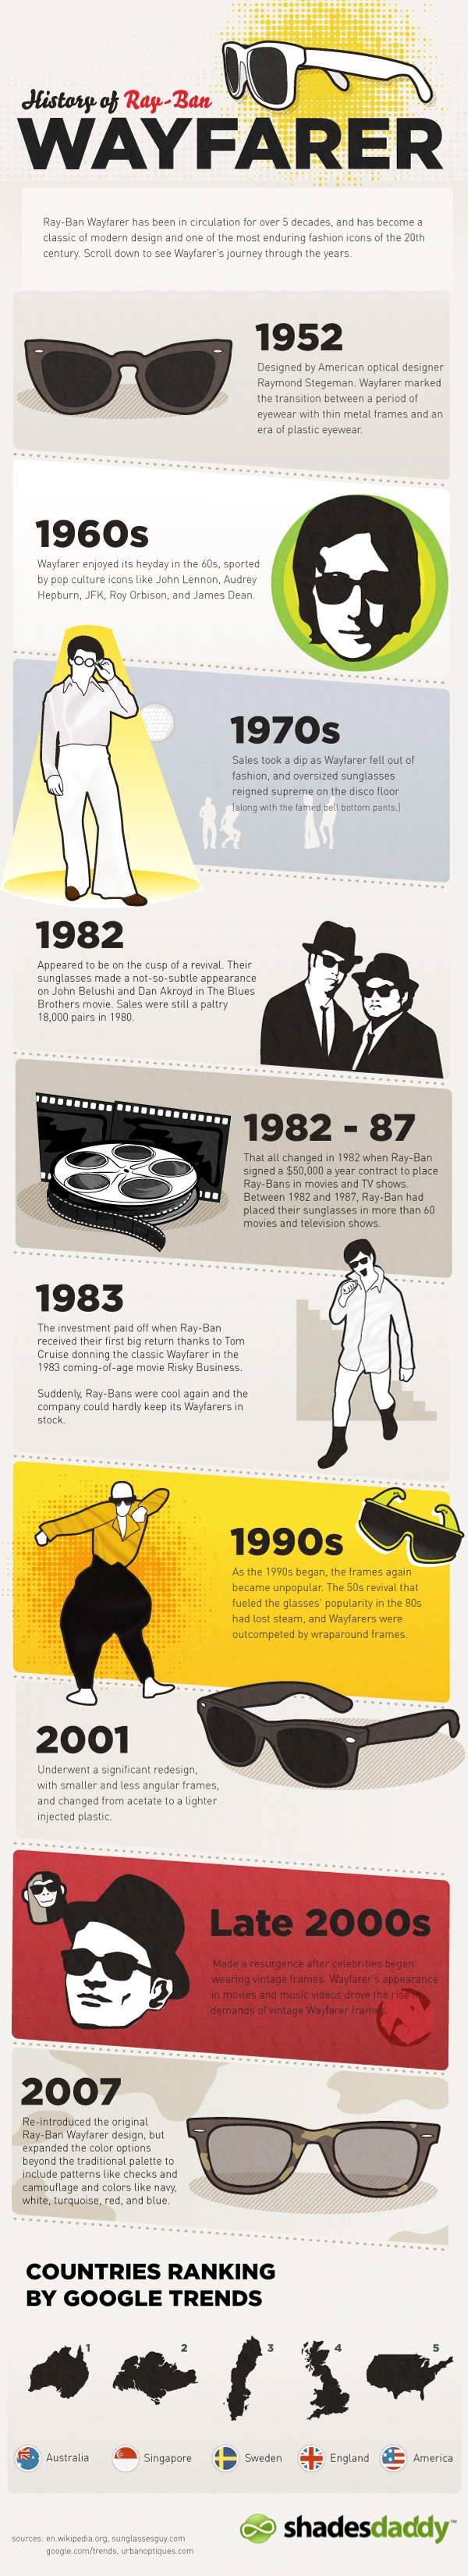 history of ray-ban wayfarers sunglasses